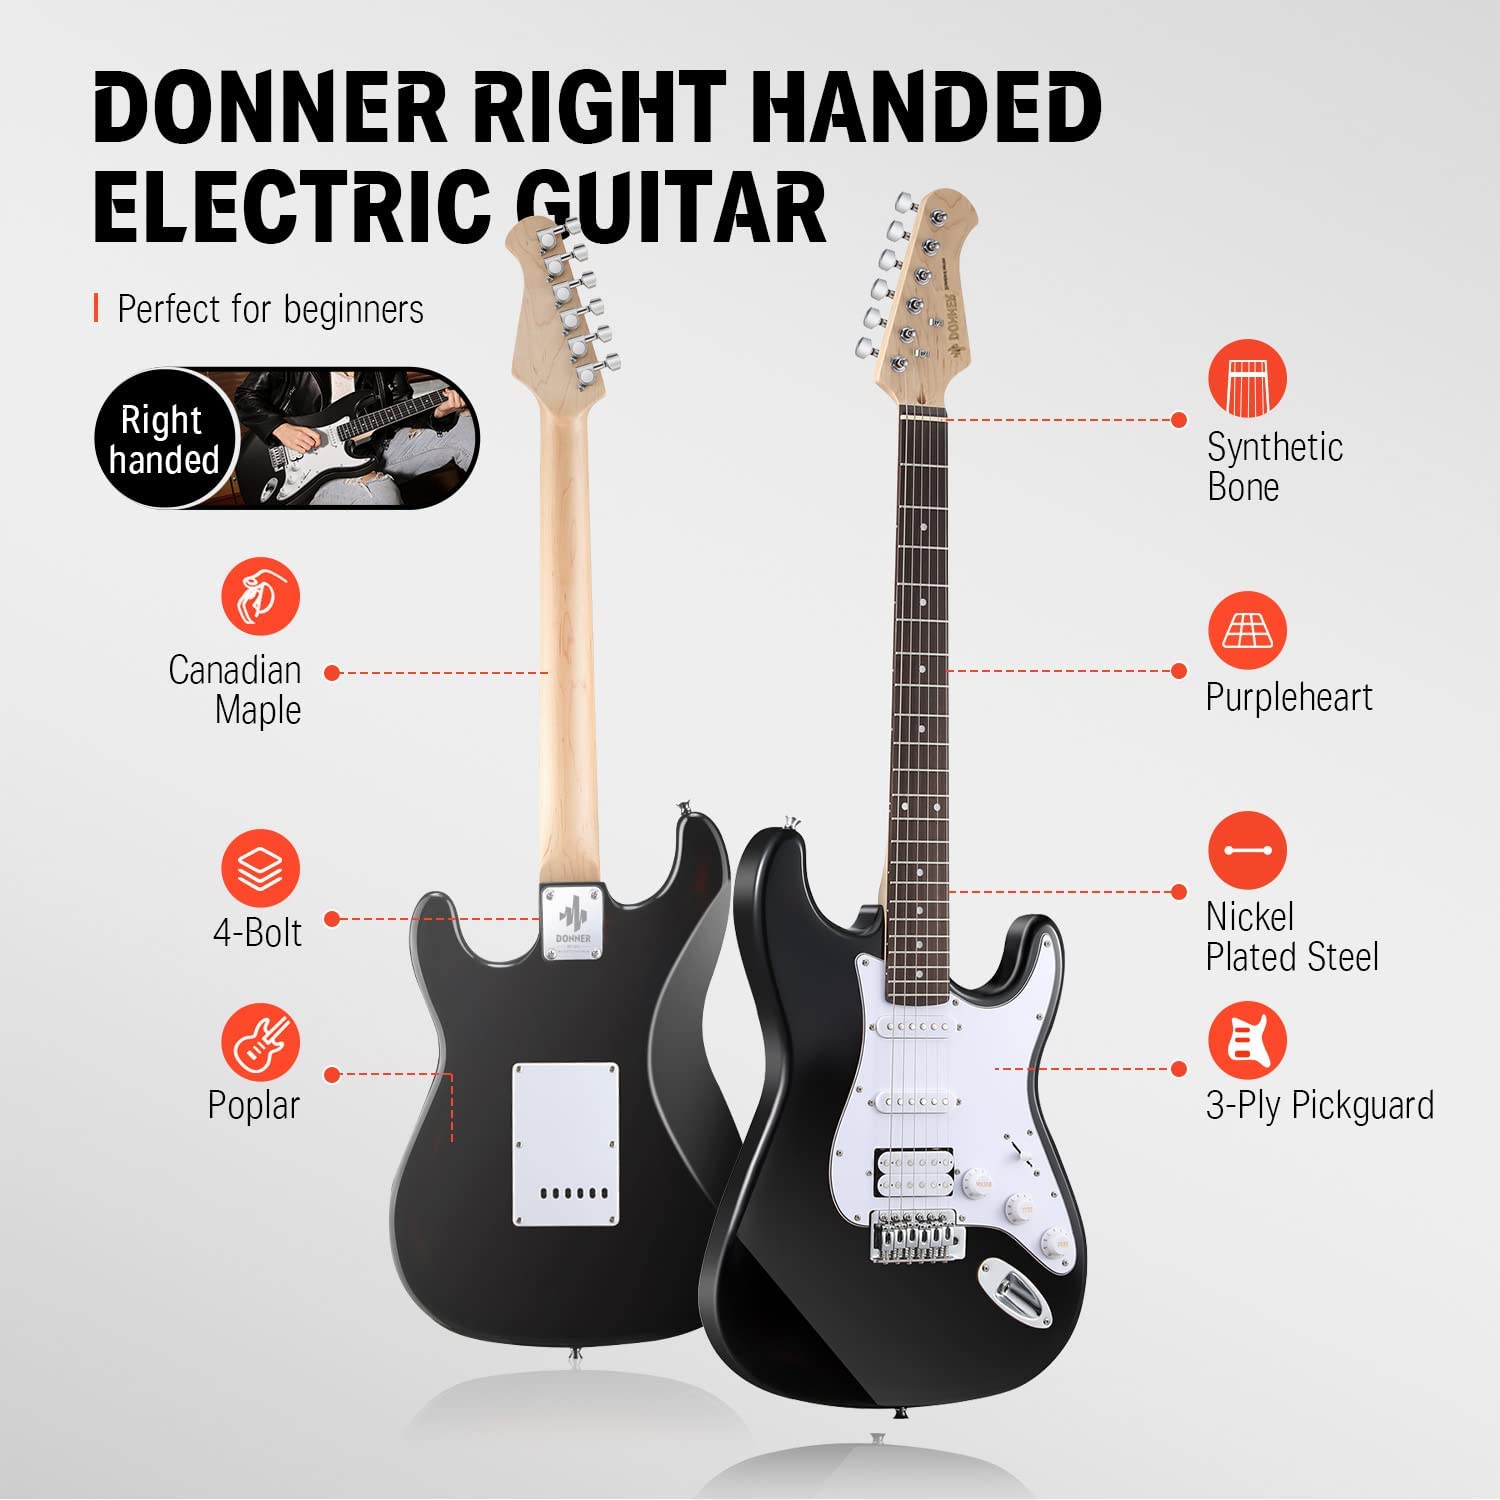 Donner DST-100B 39" Electric Guitar Beginner Kit Solid Body Full Size HSS for Starter, with Amplifier, Bag, Digital Tuner, Capo, Strap, String, Cable, Picks, Black - image 3 of 11